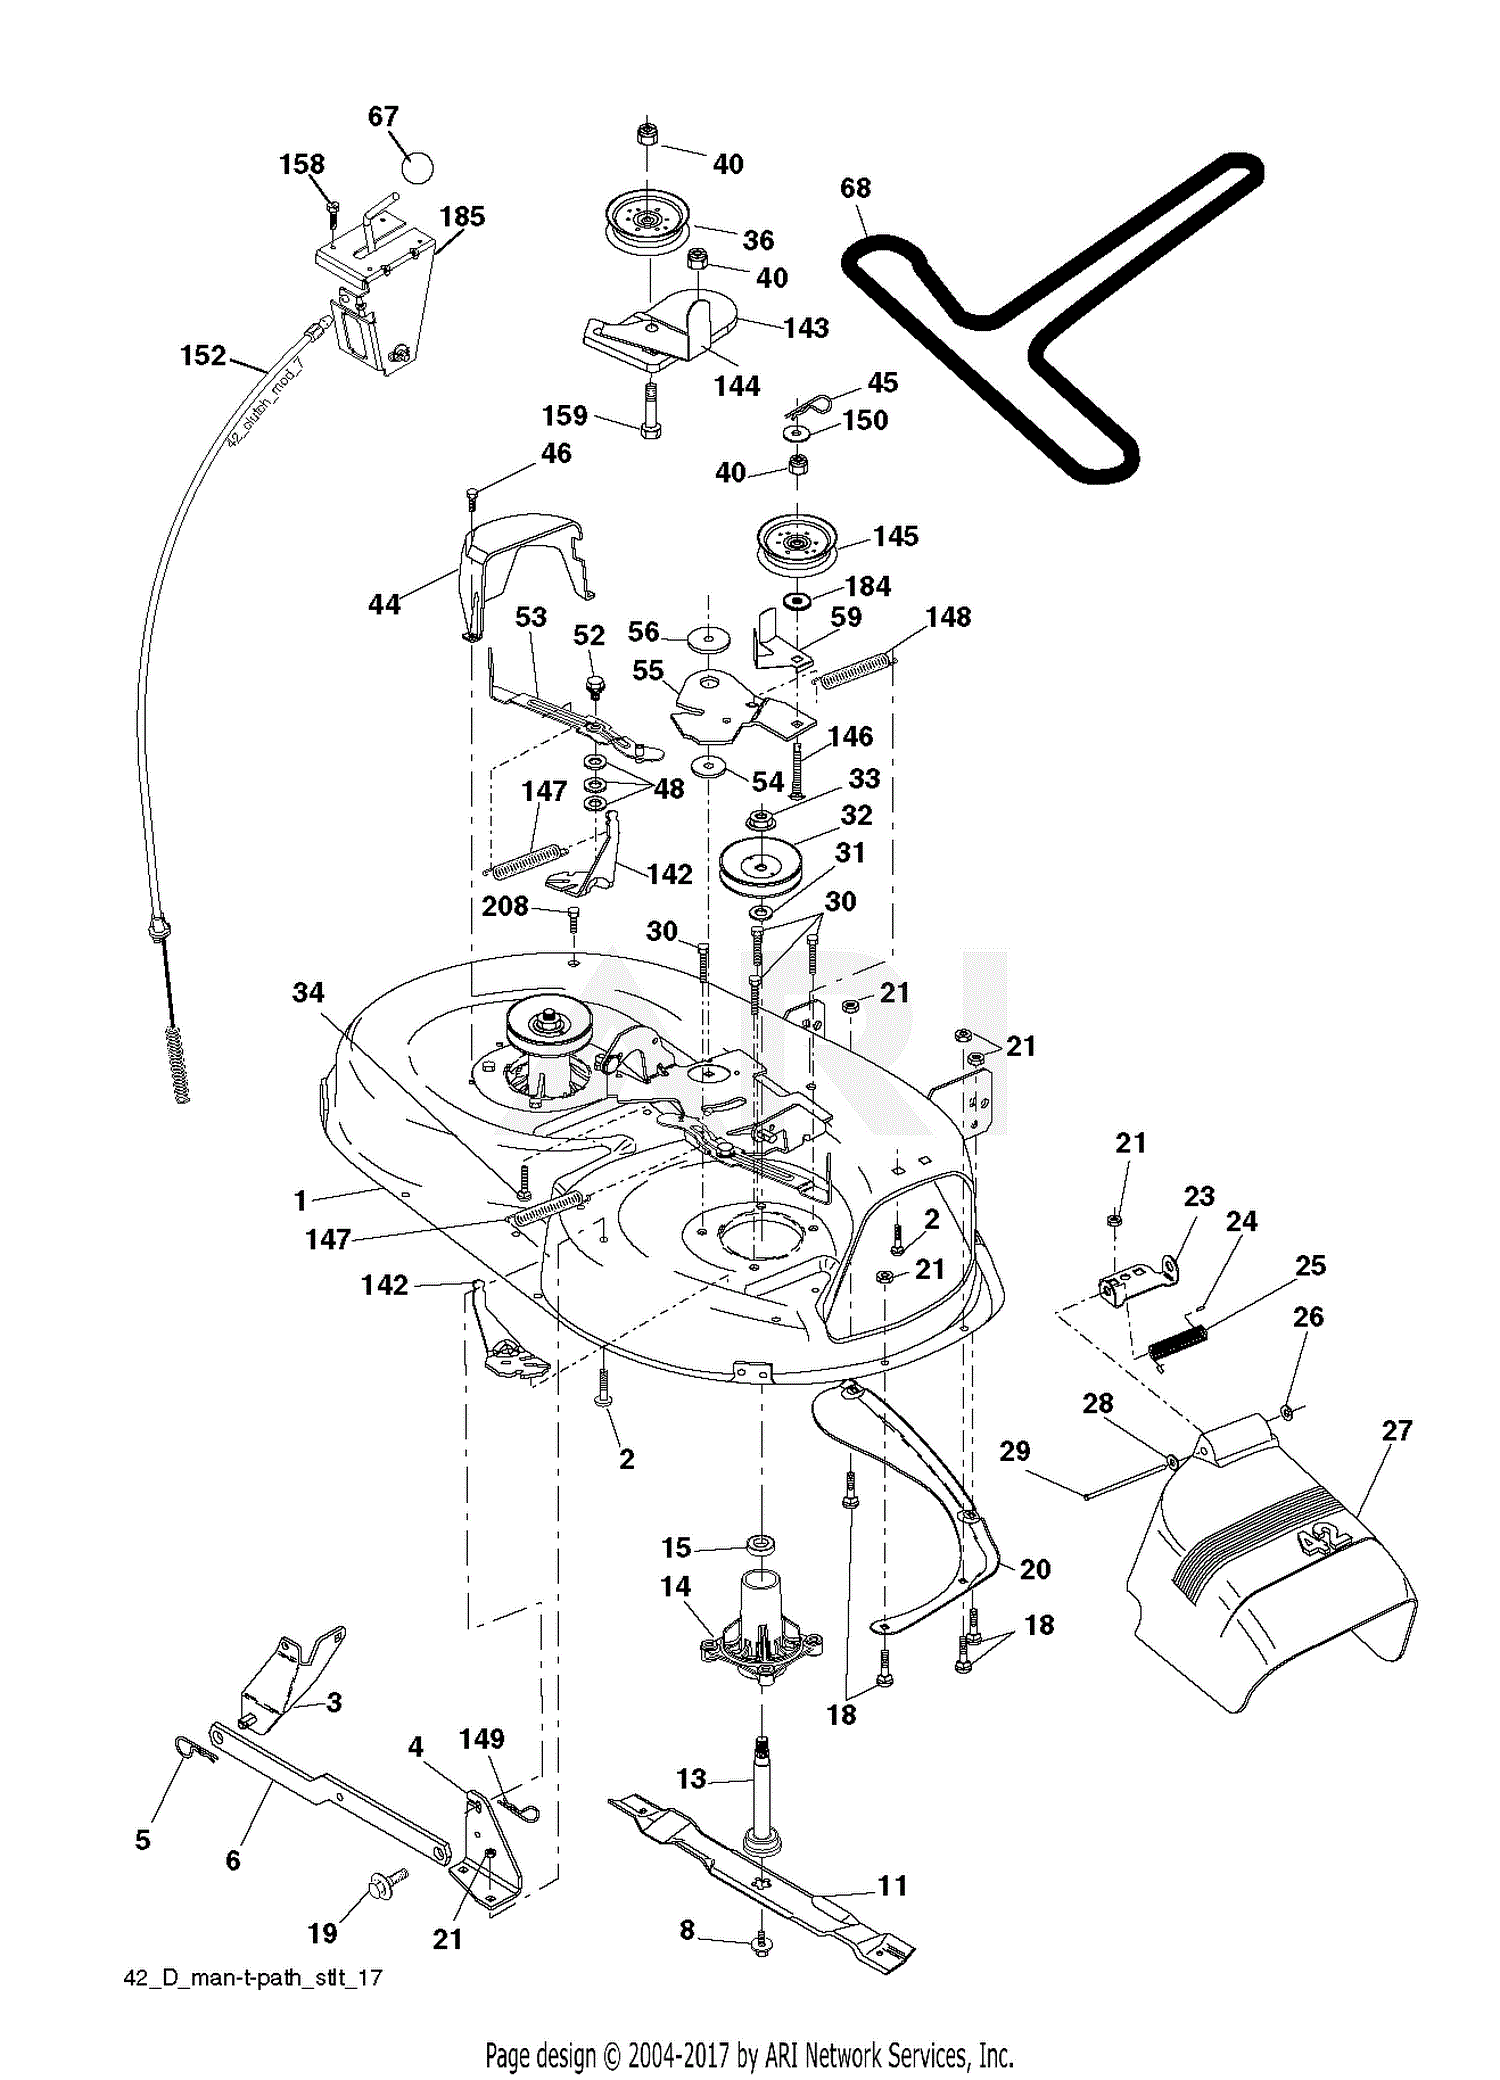 drive belt diagram for poulan riding mower